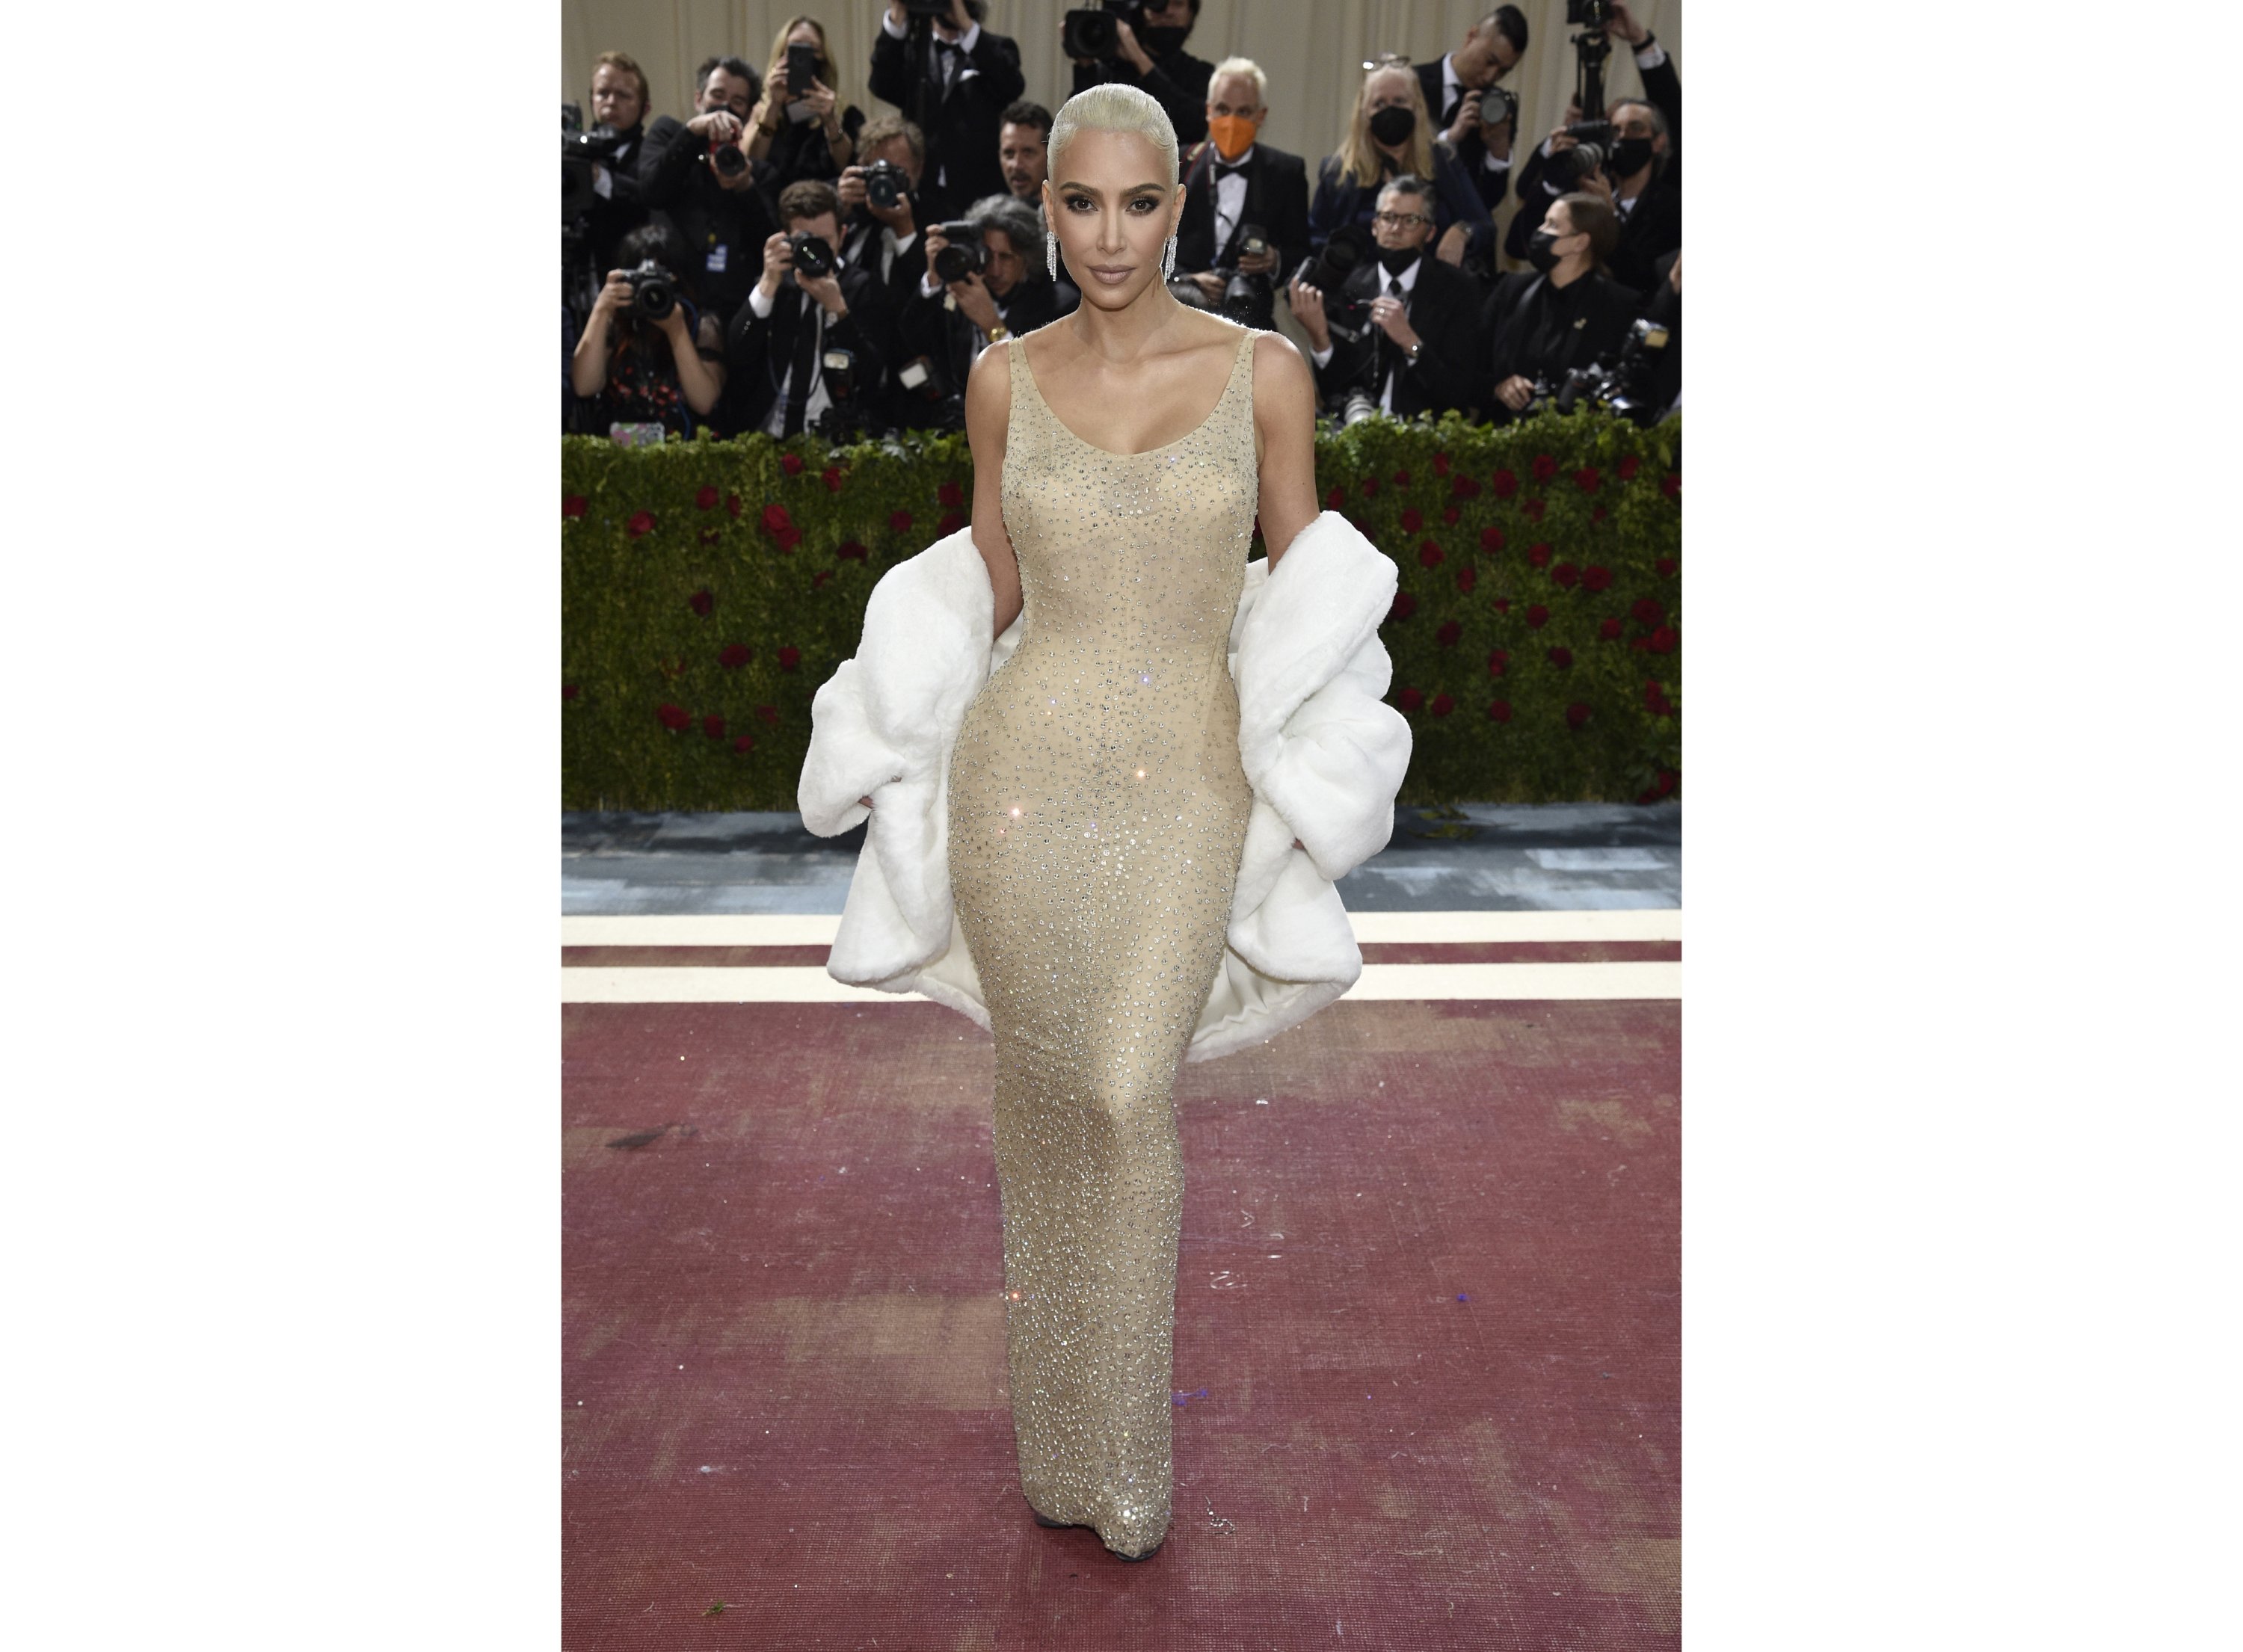 The Kim Kardashian Marilyn Monroe Dress Controversy Explained